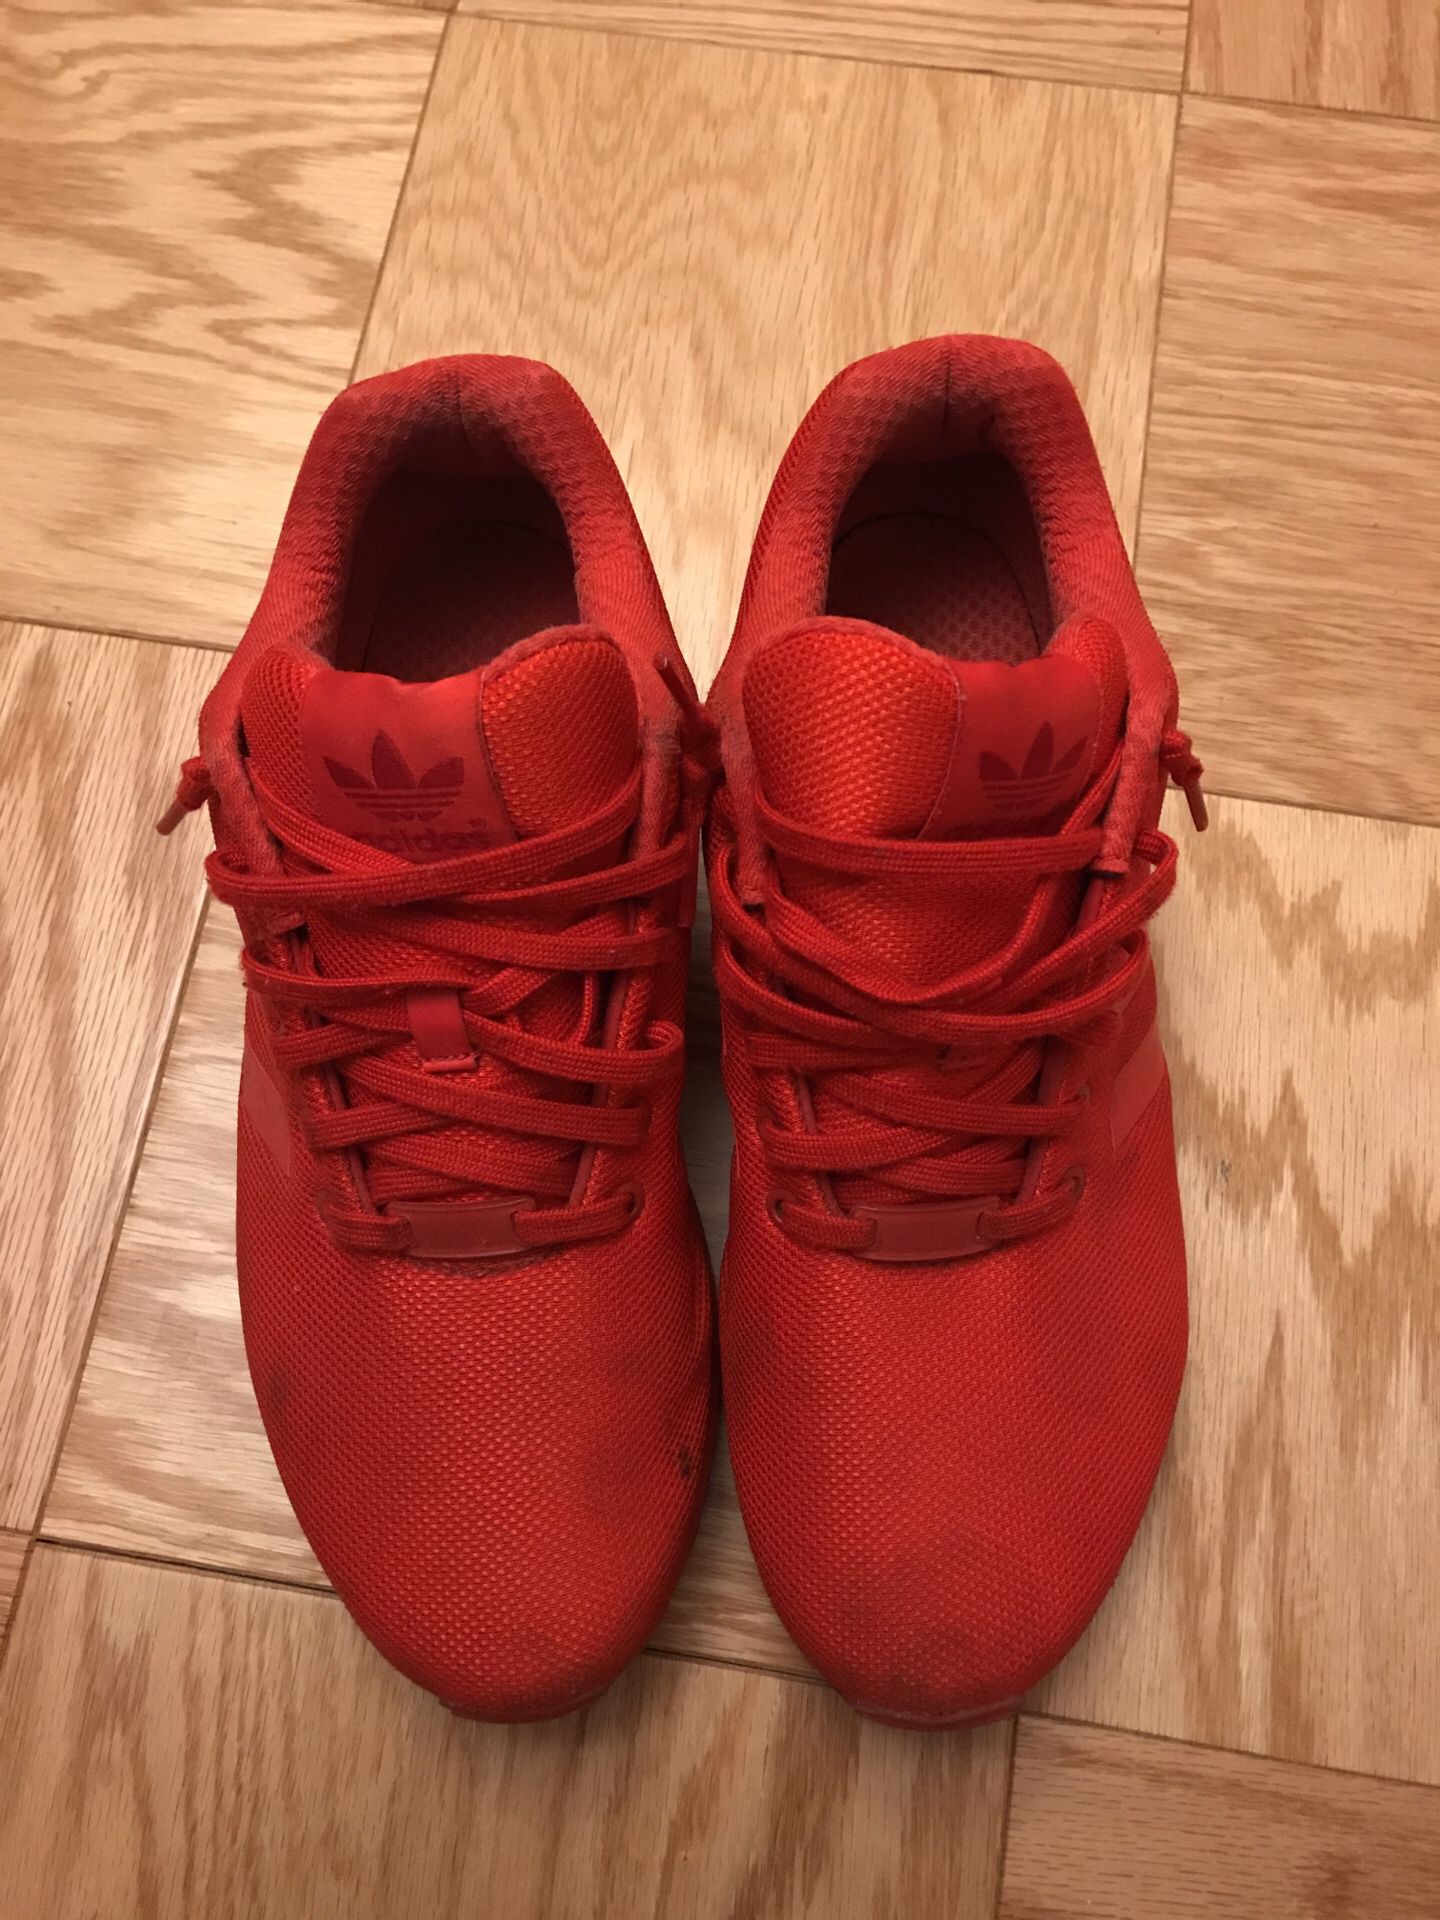 Men’s Adidas ZX Flux RED size 9